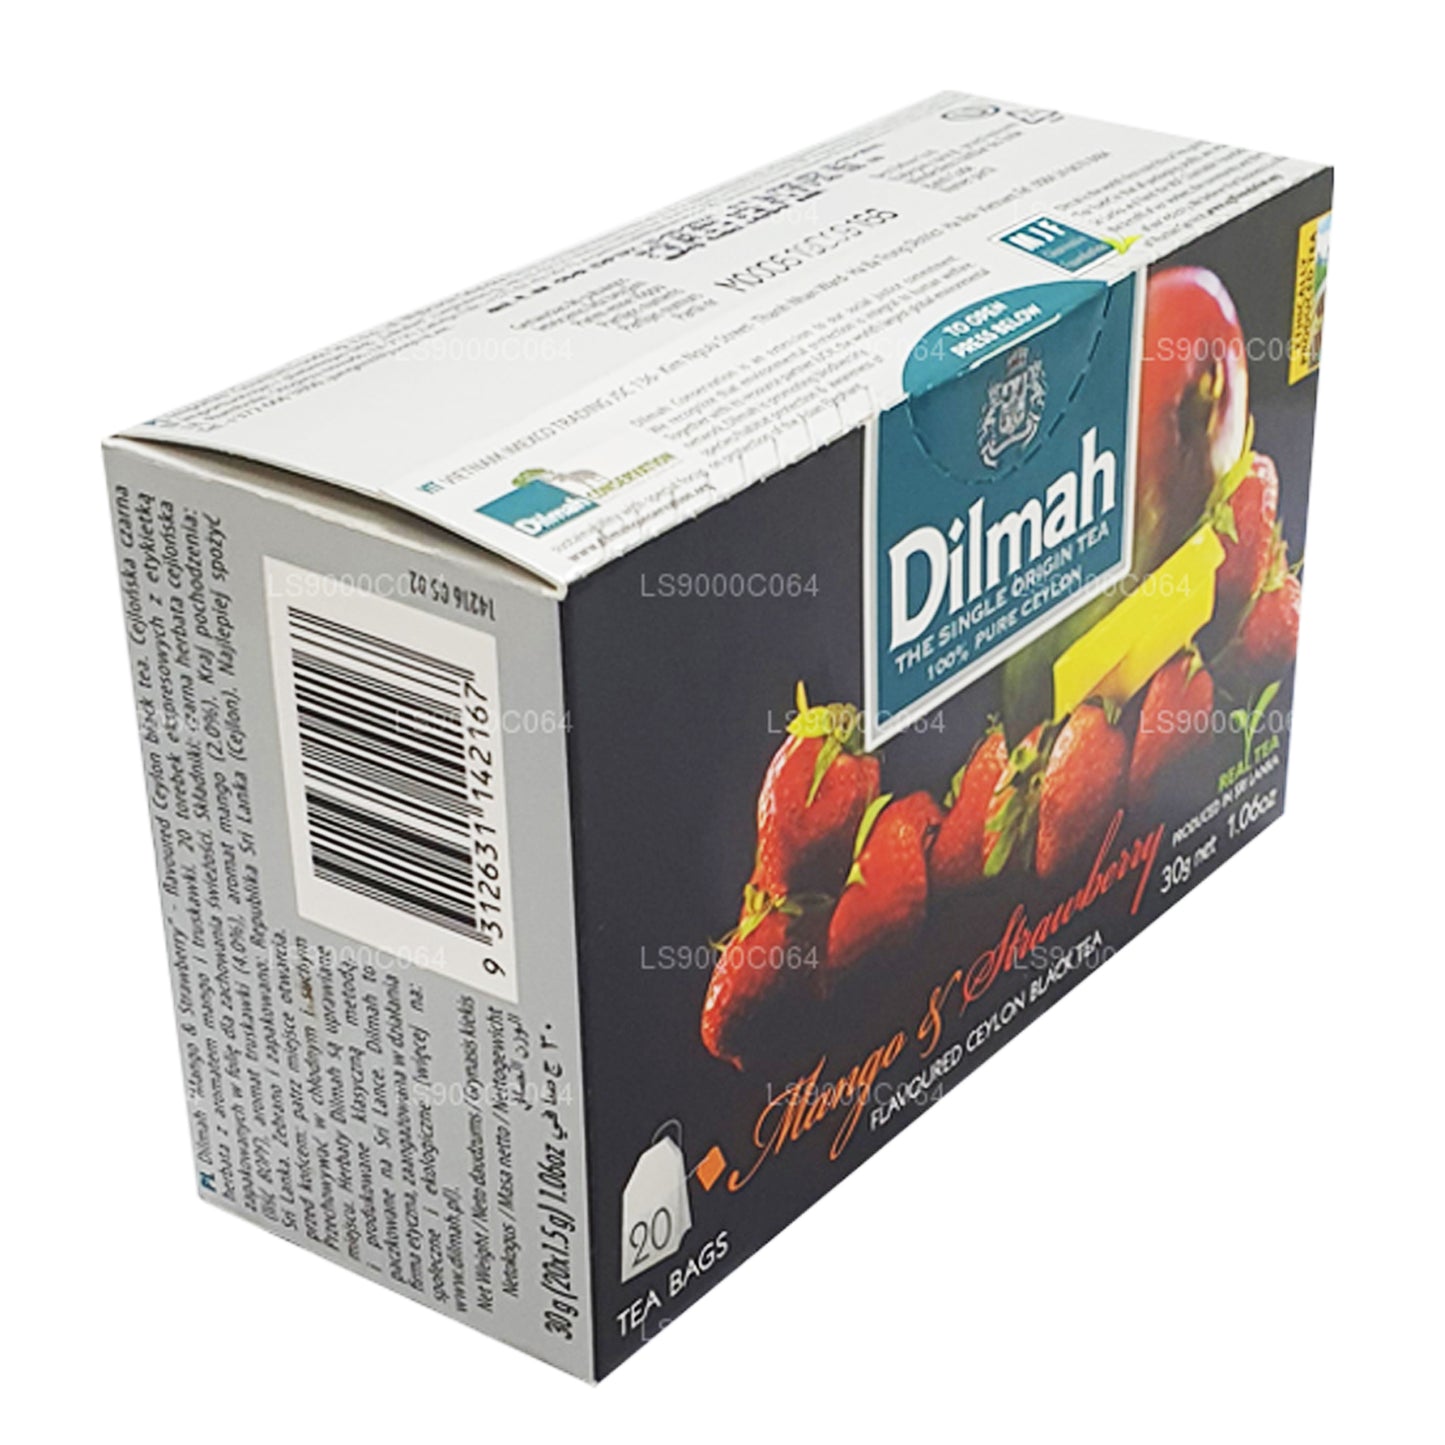 Dilmah Mango and Strawberry Flavored Tea (30g) 20 Tea Bags